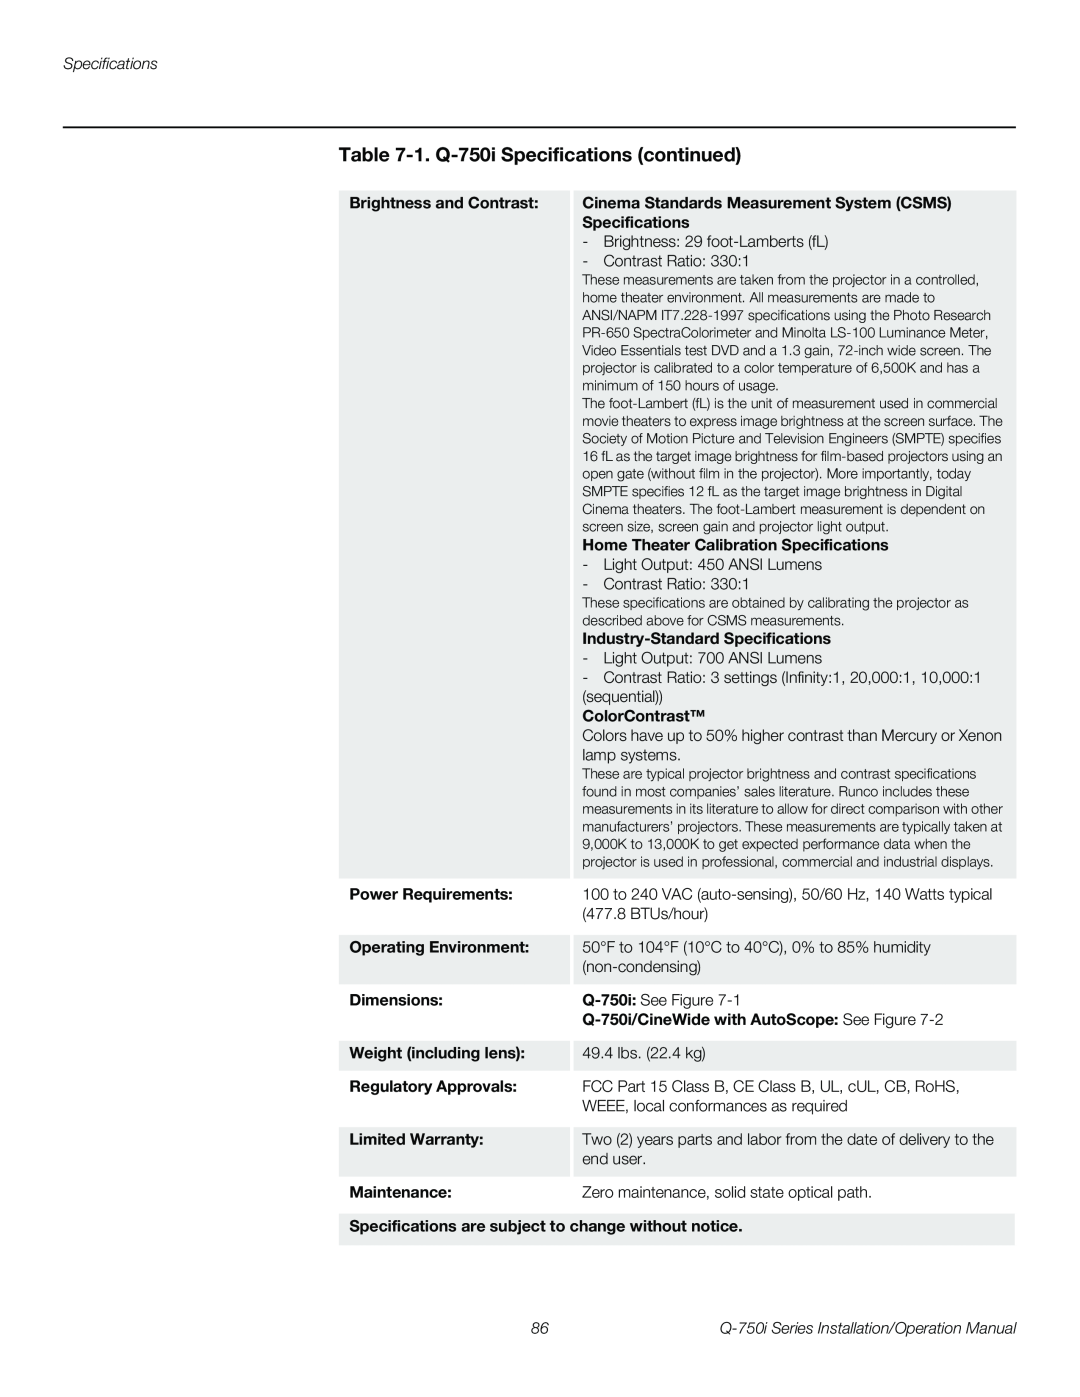 Runco Q-750I operation manual 1. Q-750iSpecifications continued 